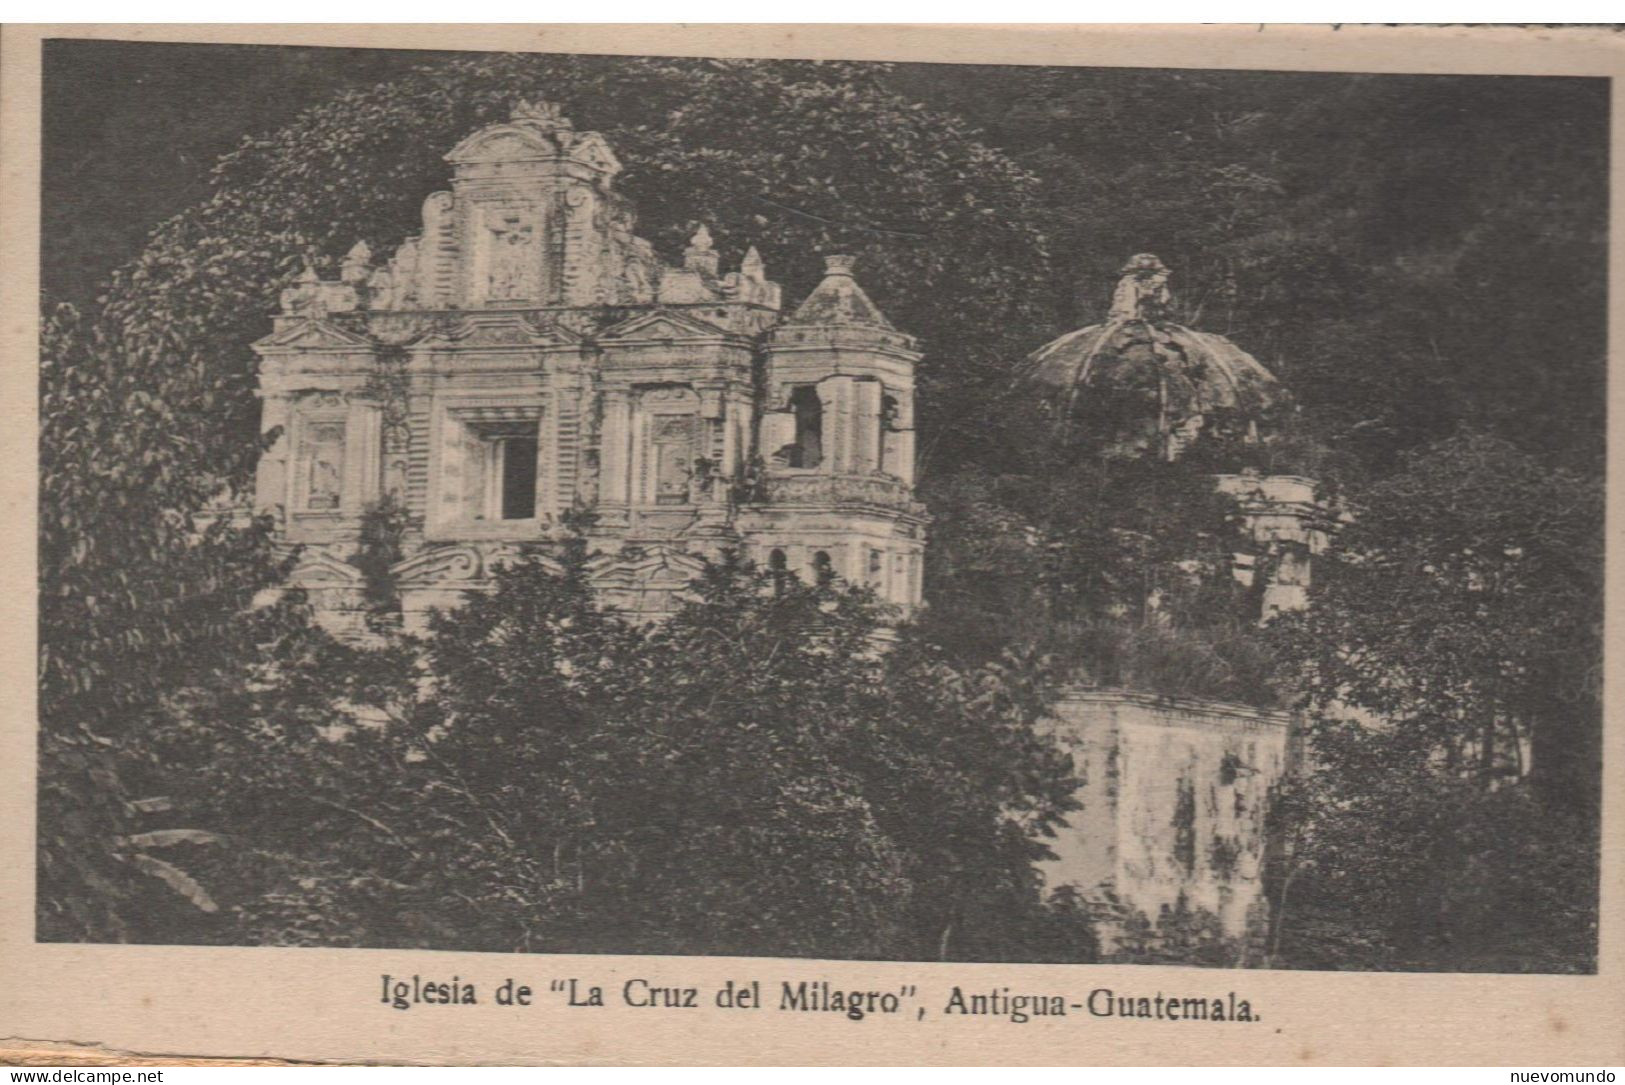 11 tarjetas de Antigua Guatemala editadas por C. Francisco Juárez A. de Antigua Guatemala